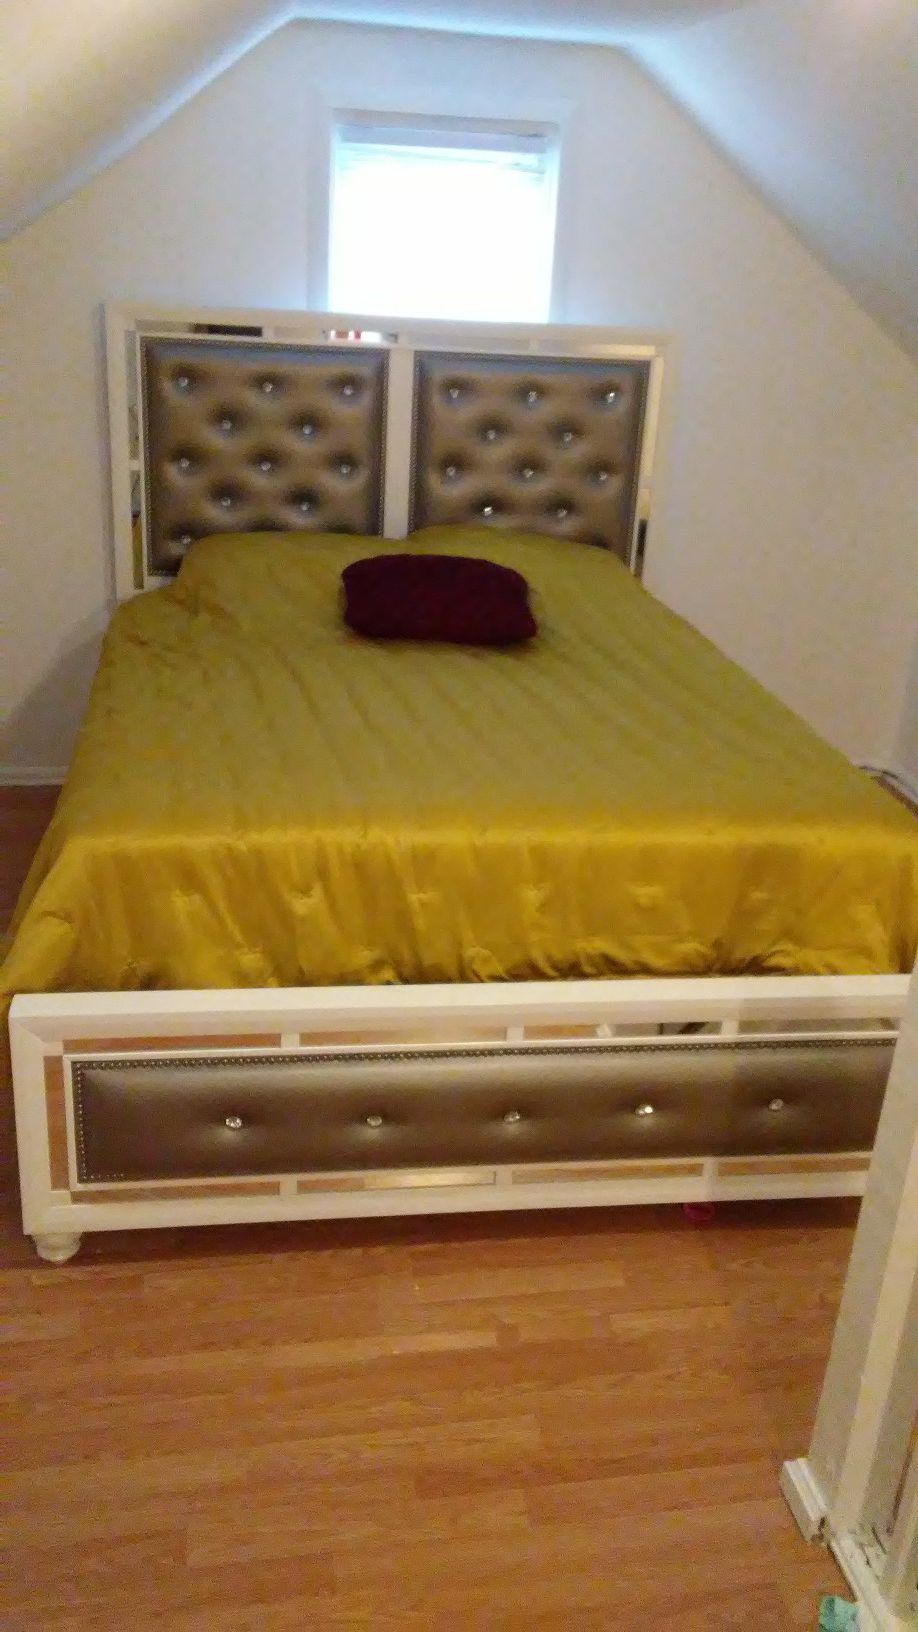 Brand new 3pc Bedroom Set & New Mattresses - Bed, dresser & mirror and mattresses